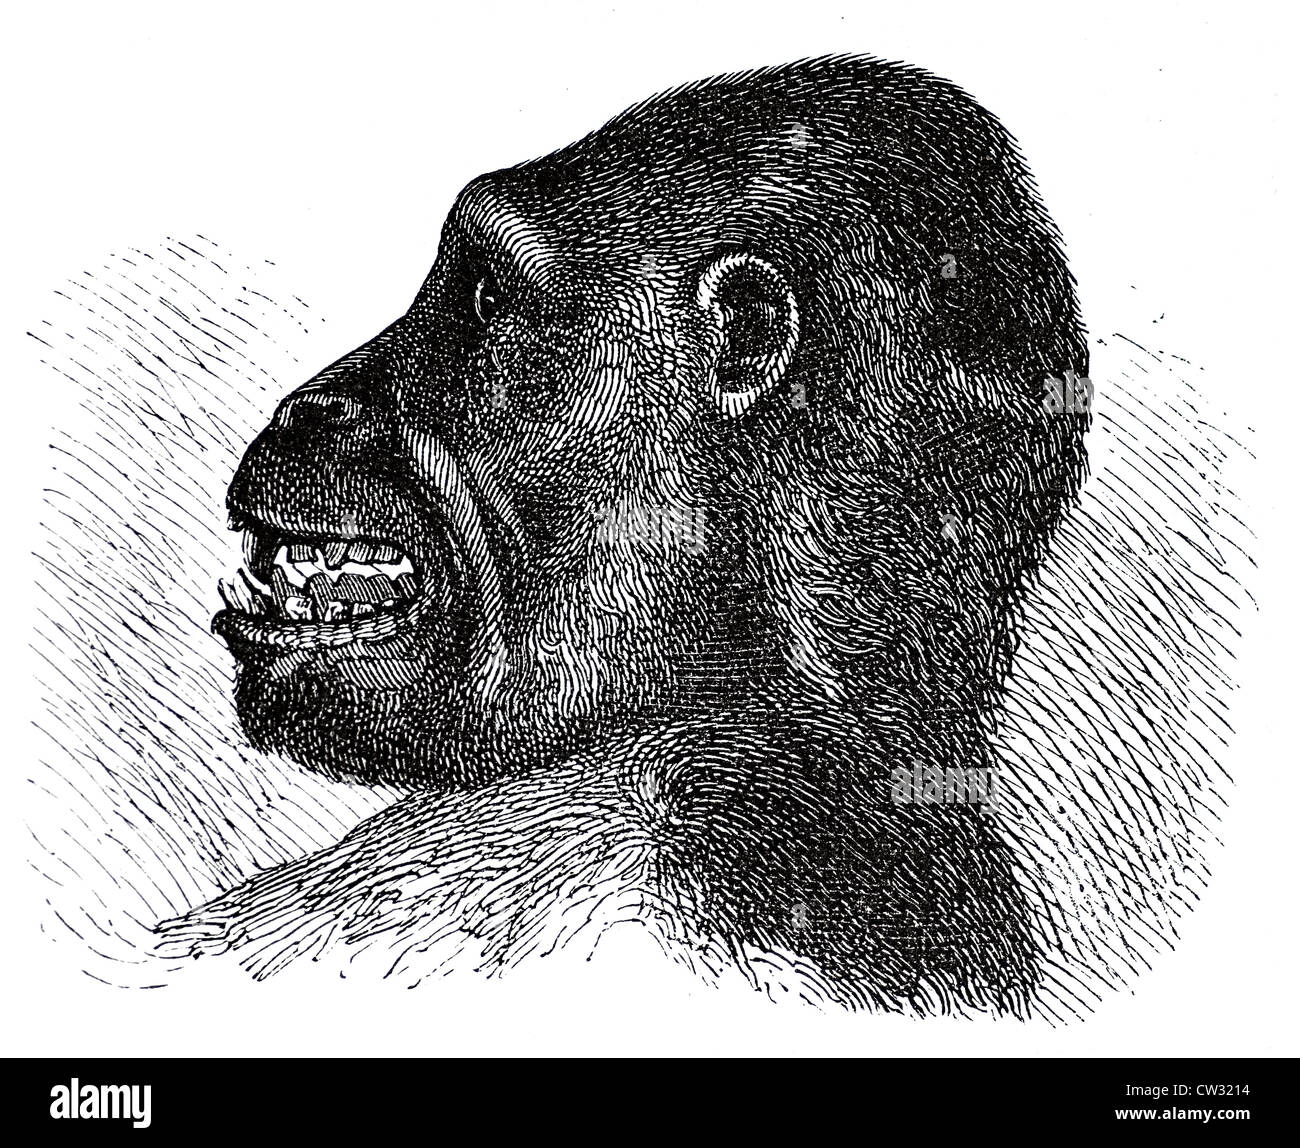 Head of the gorilla Stock Photo